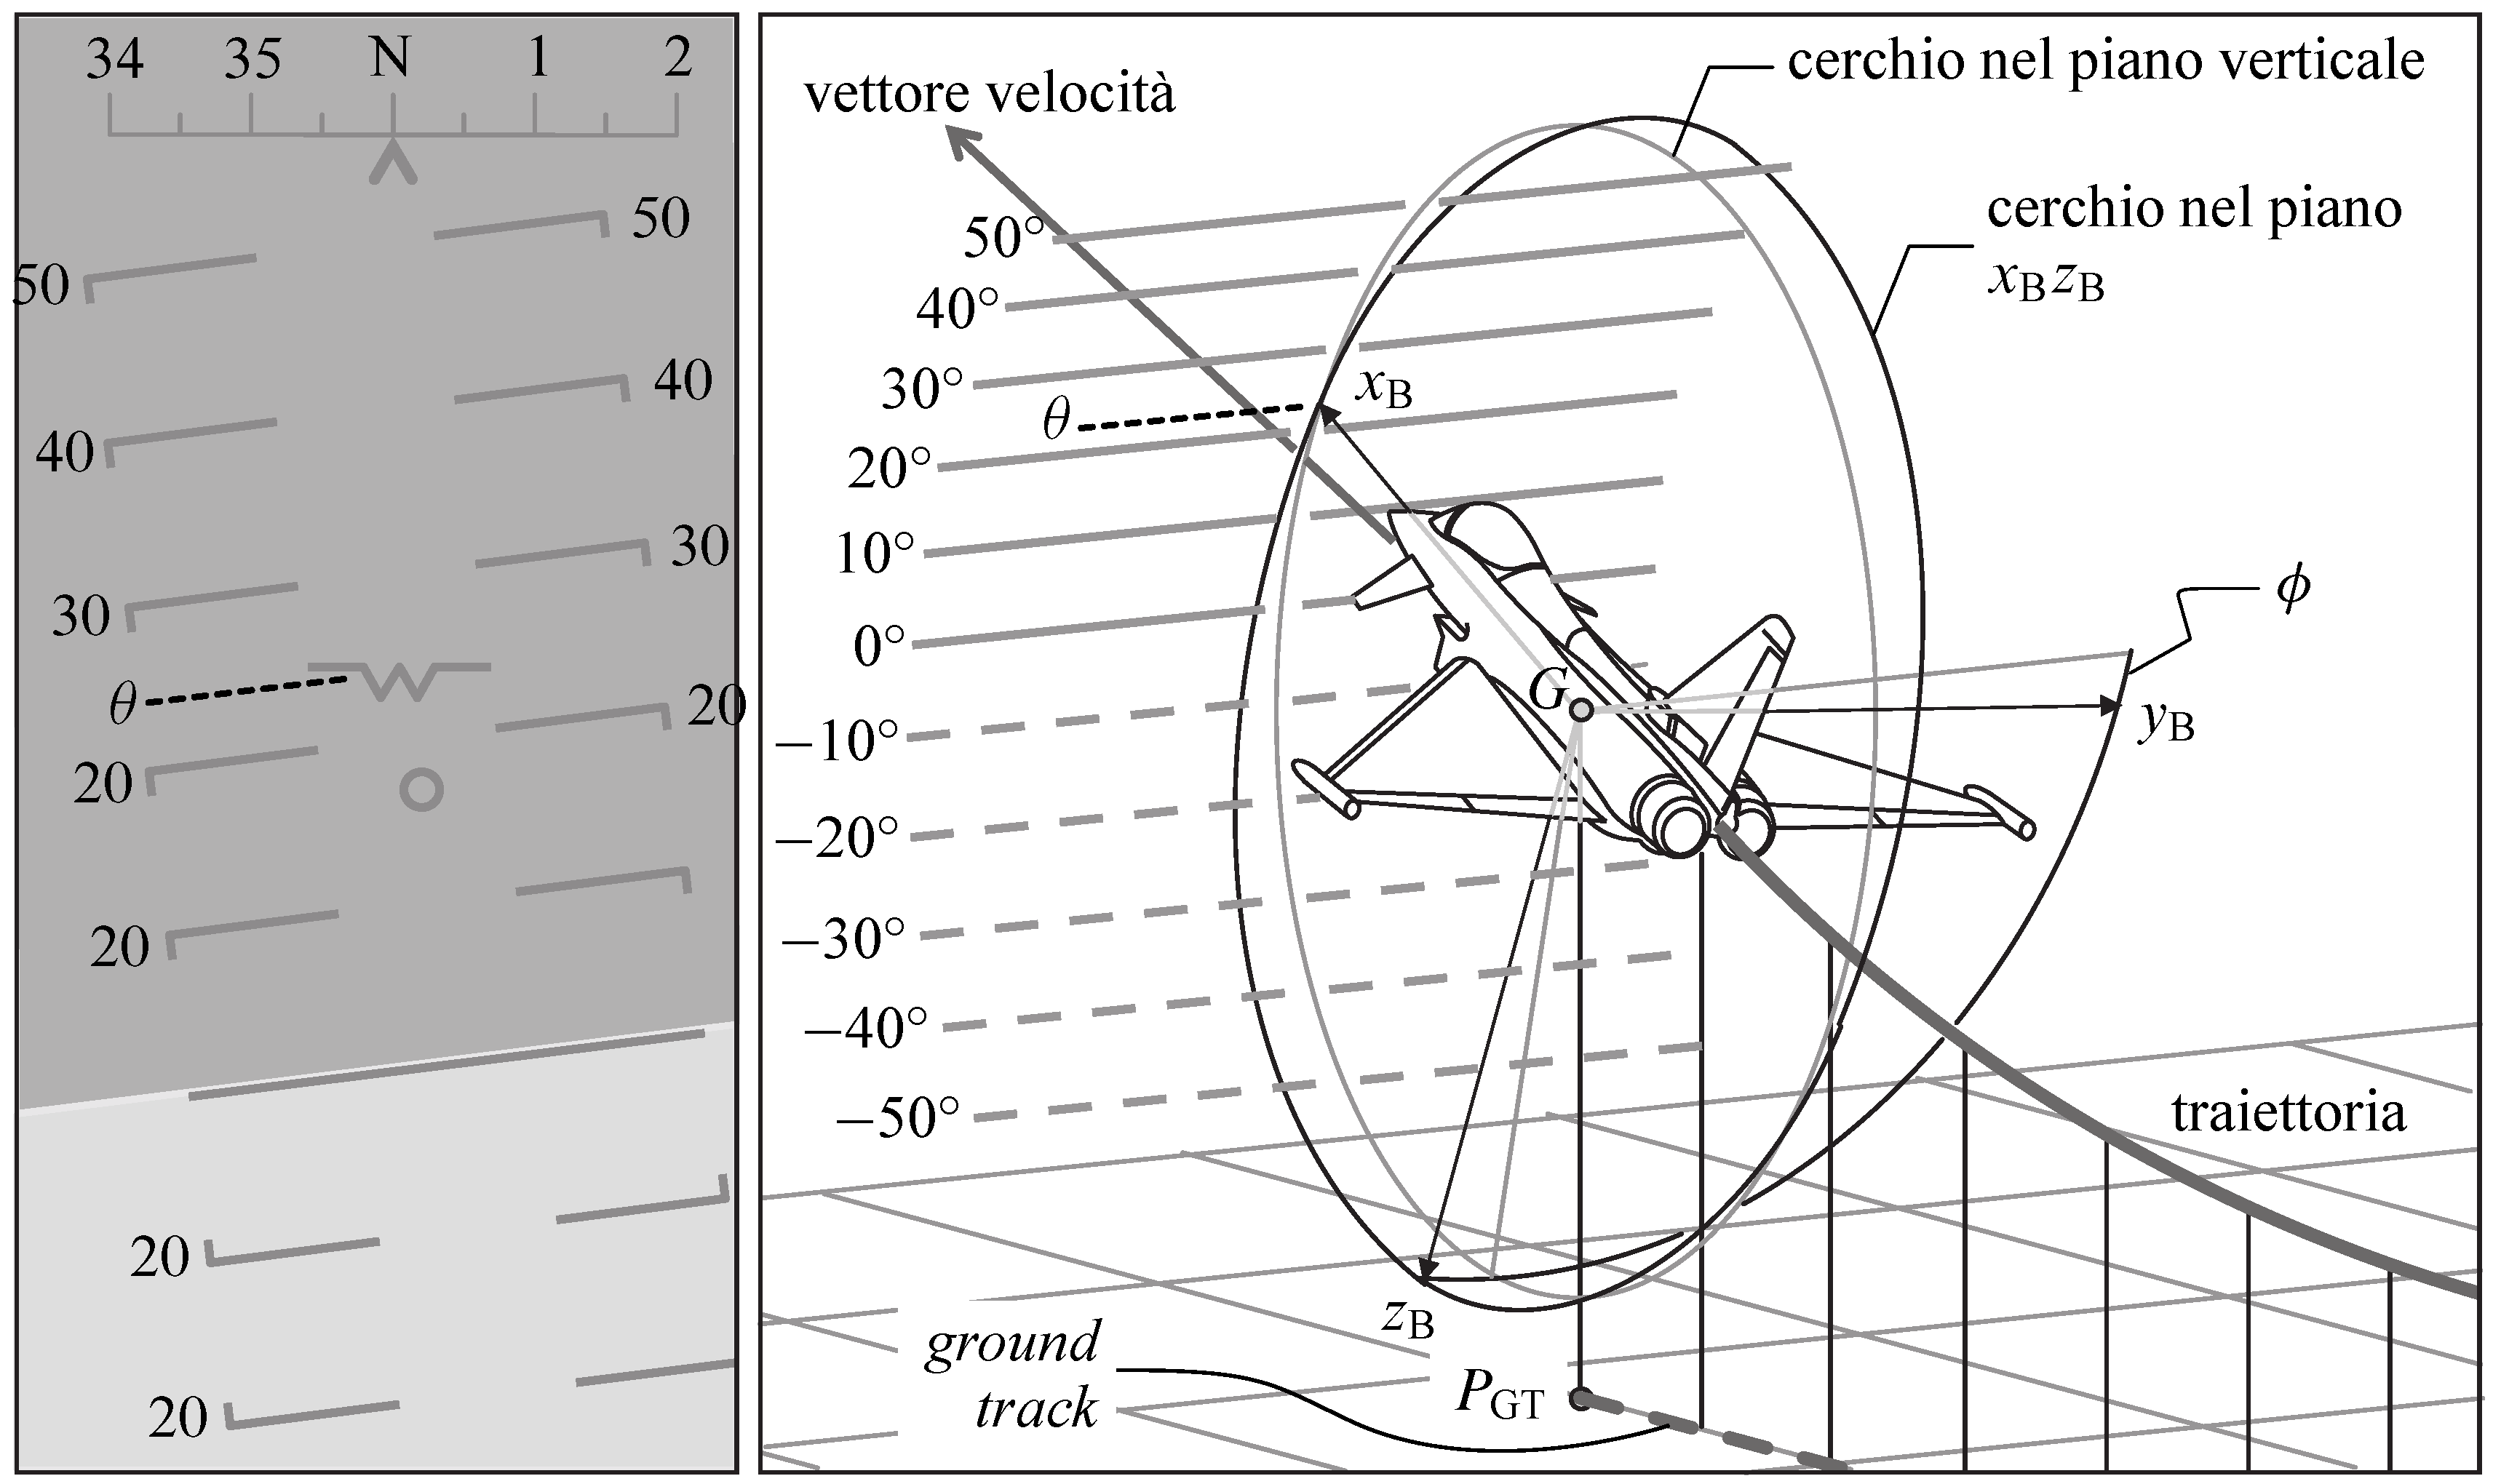 Velocity vector $\boldsymbol{V}$, ground track, airplane attitude angles $\phi$ and $\theta$ ($\psi=0$).